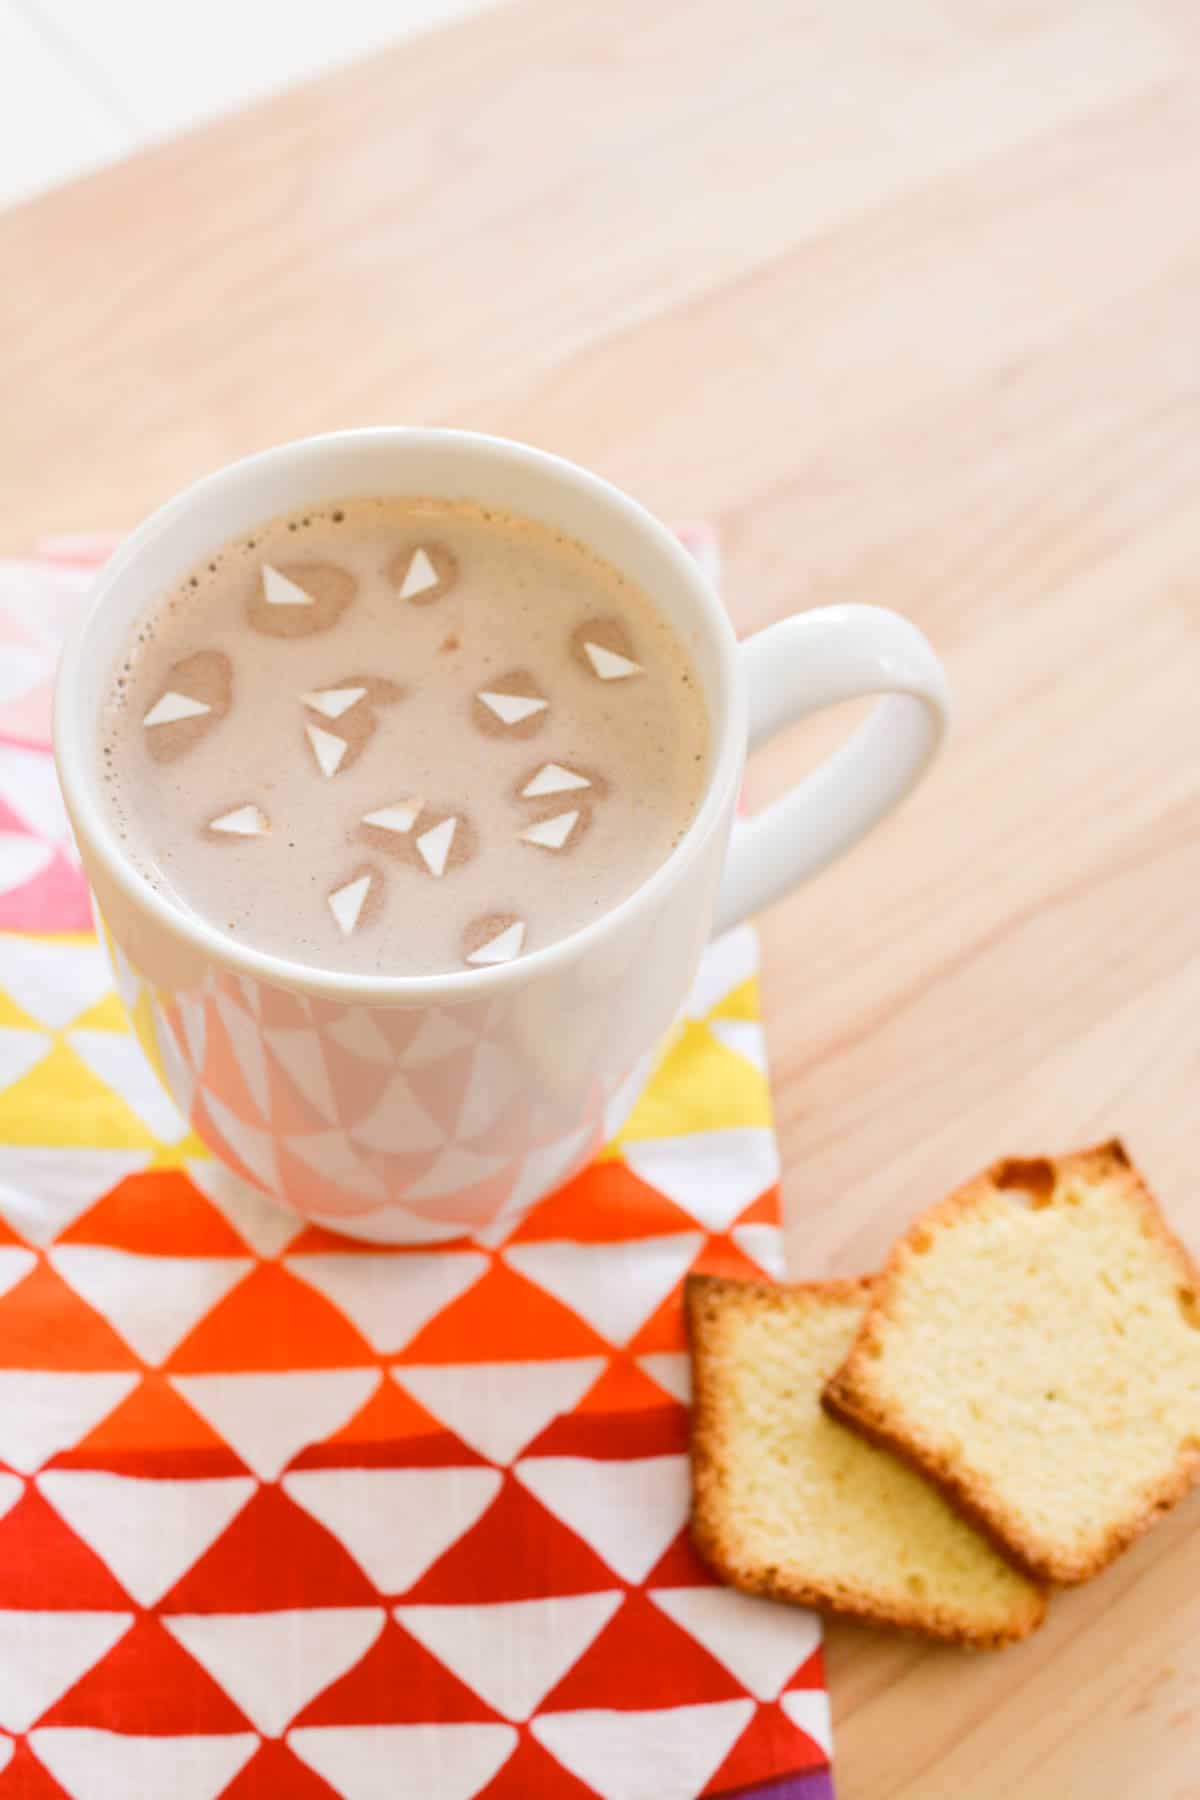 A mug of hot chocolate on a napkin topped with triangle shaped edible confetti.